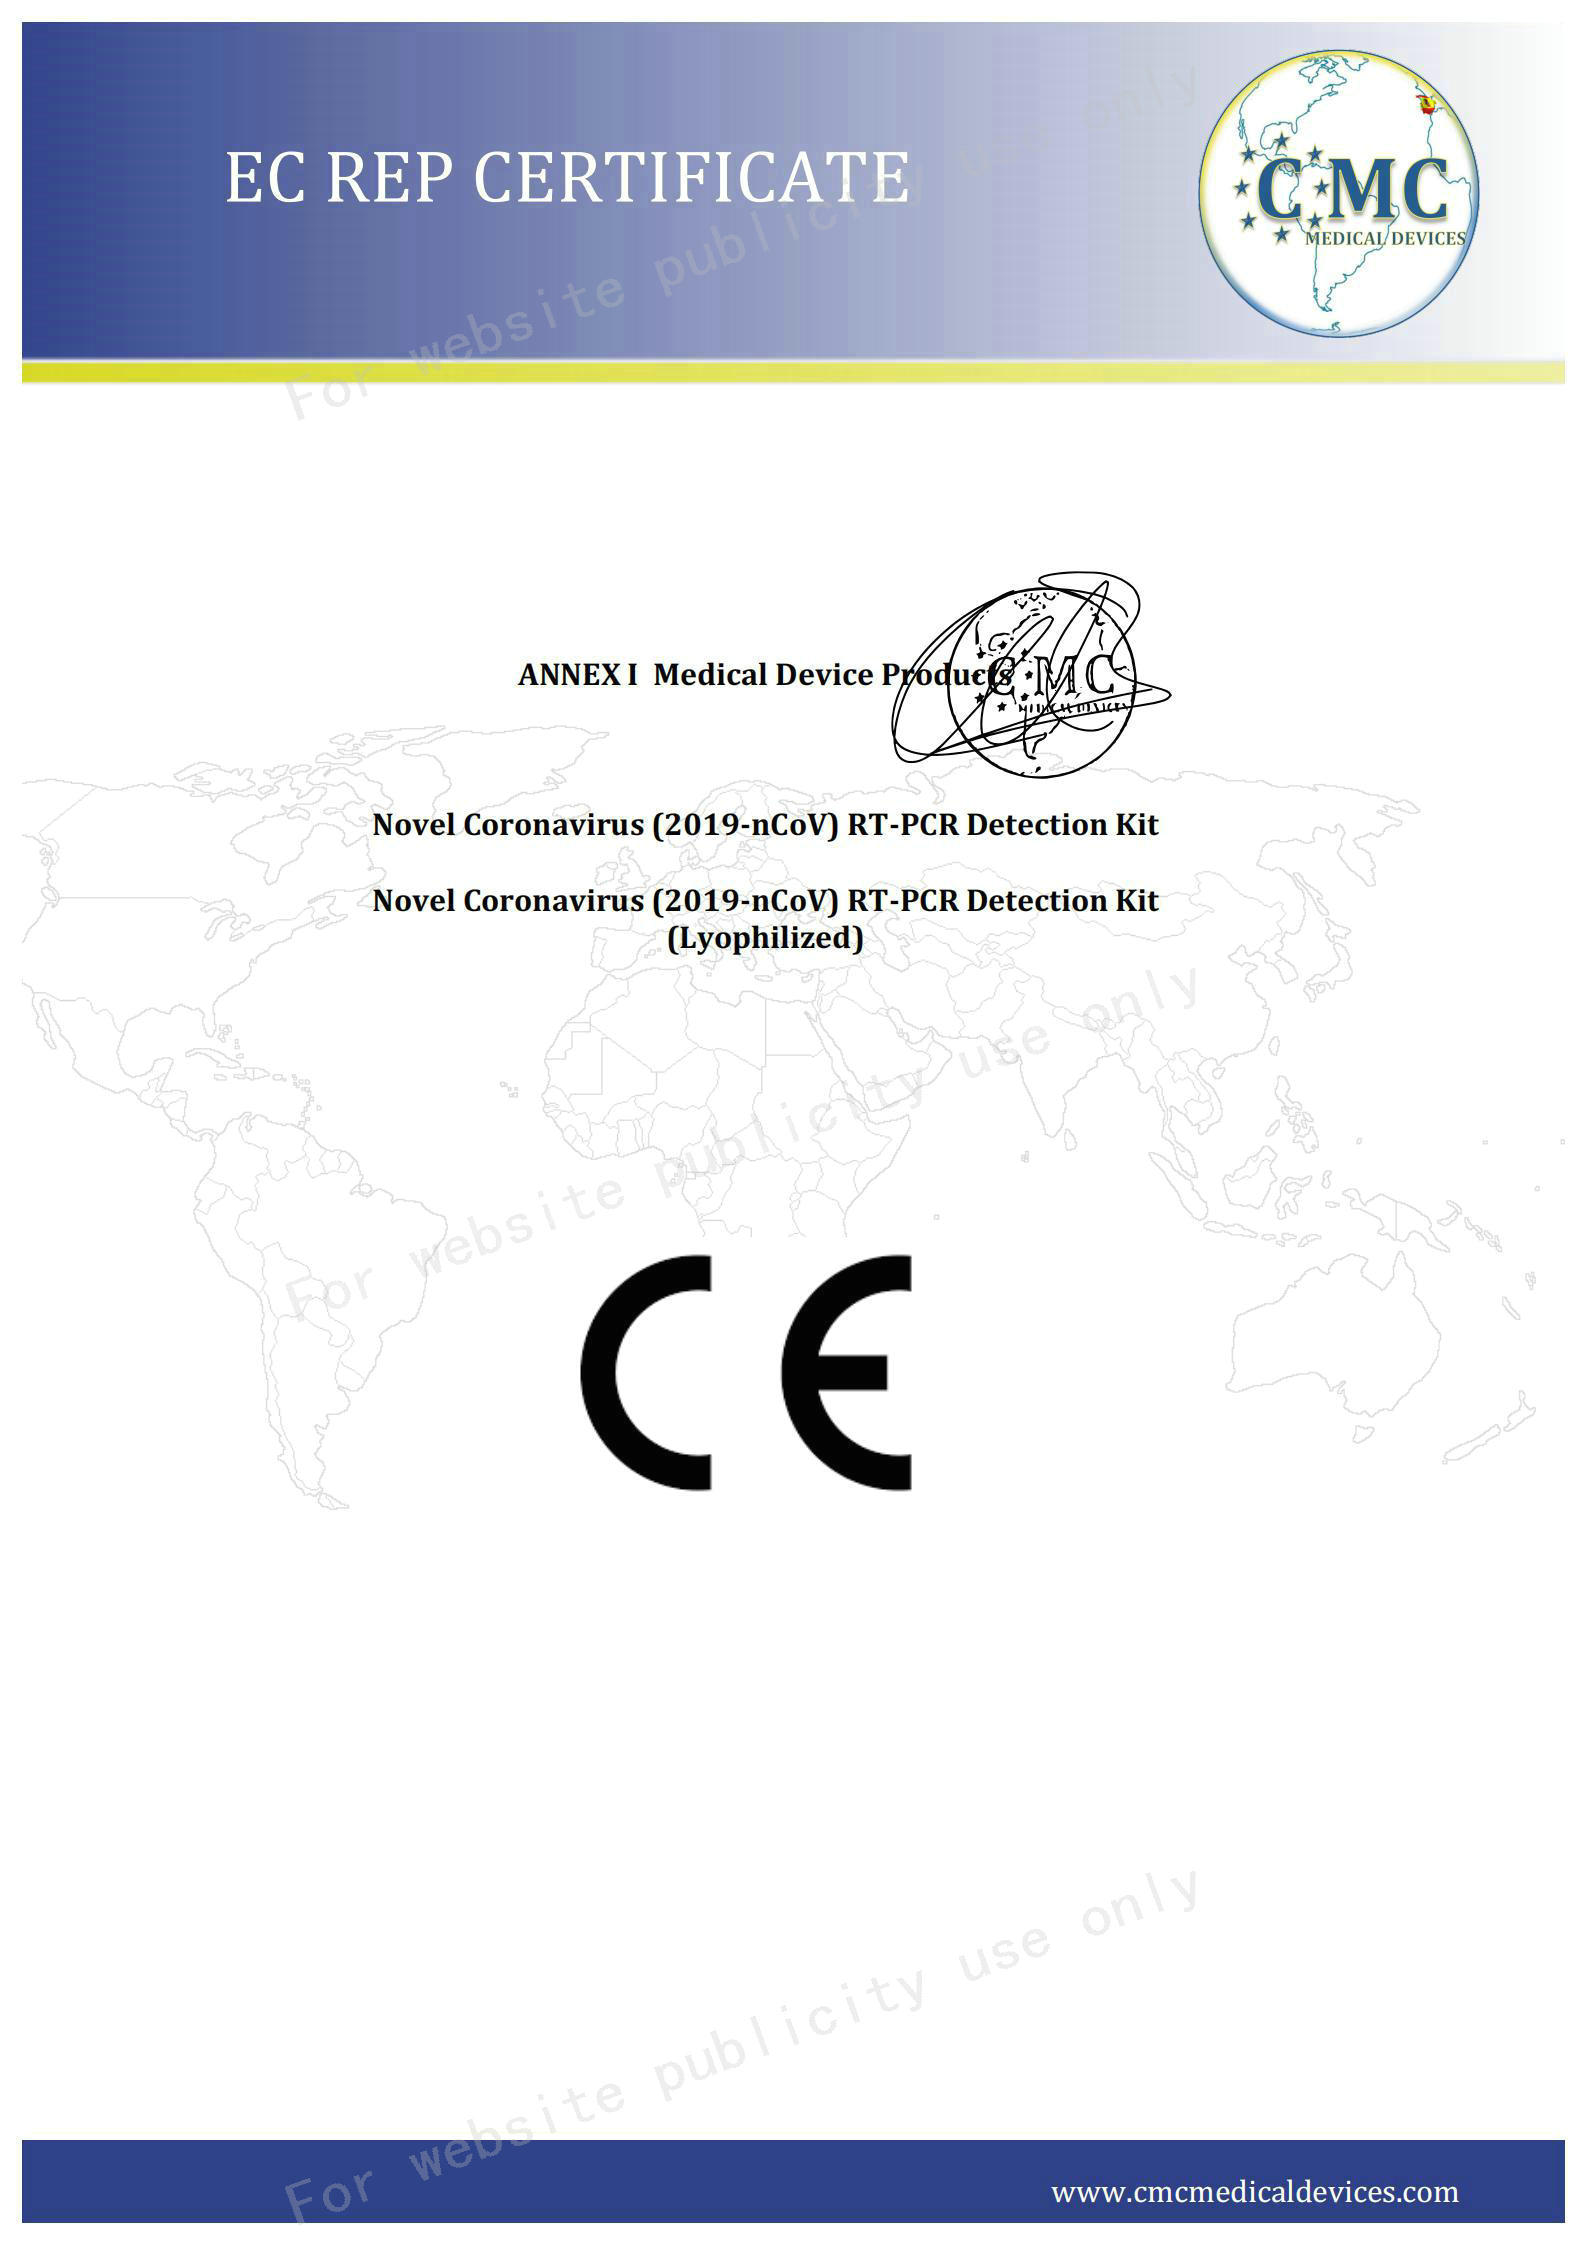 02 halaman sertifikat CE2